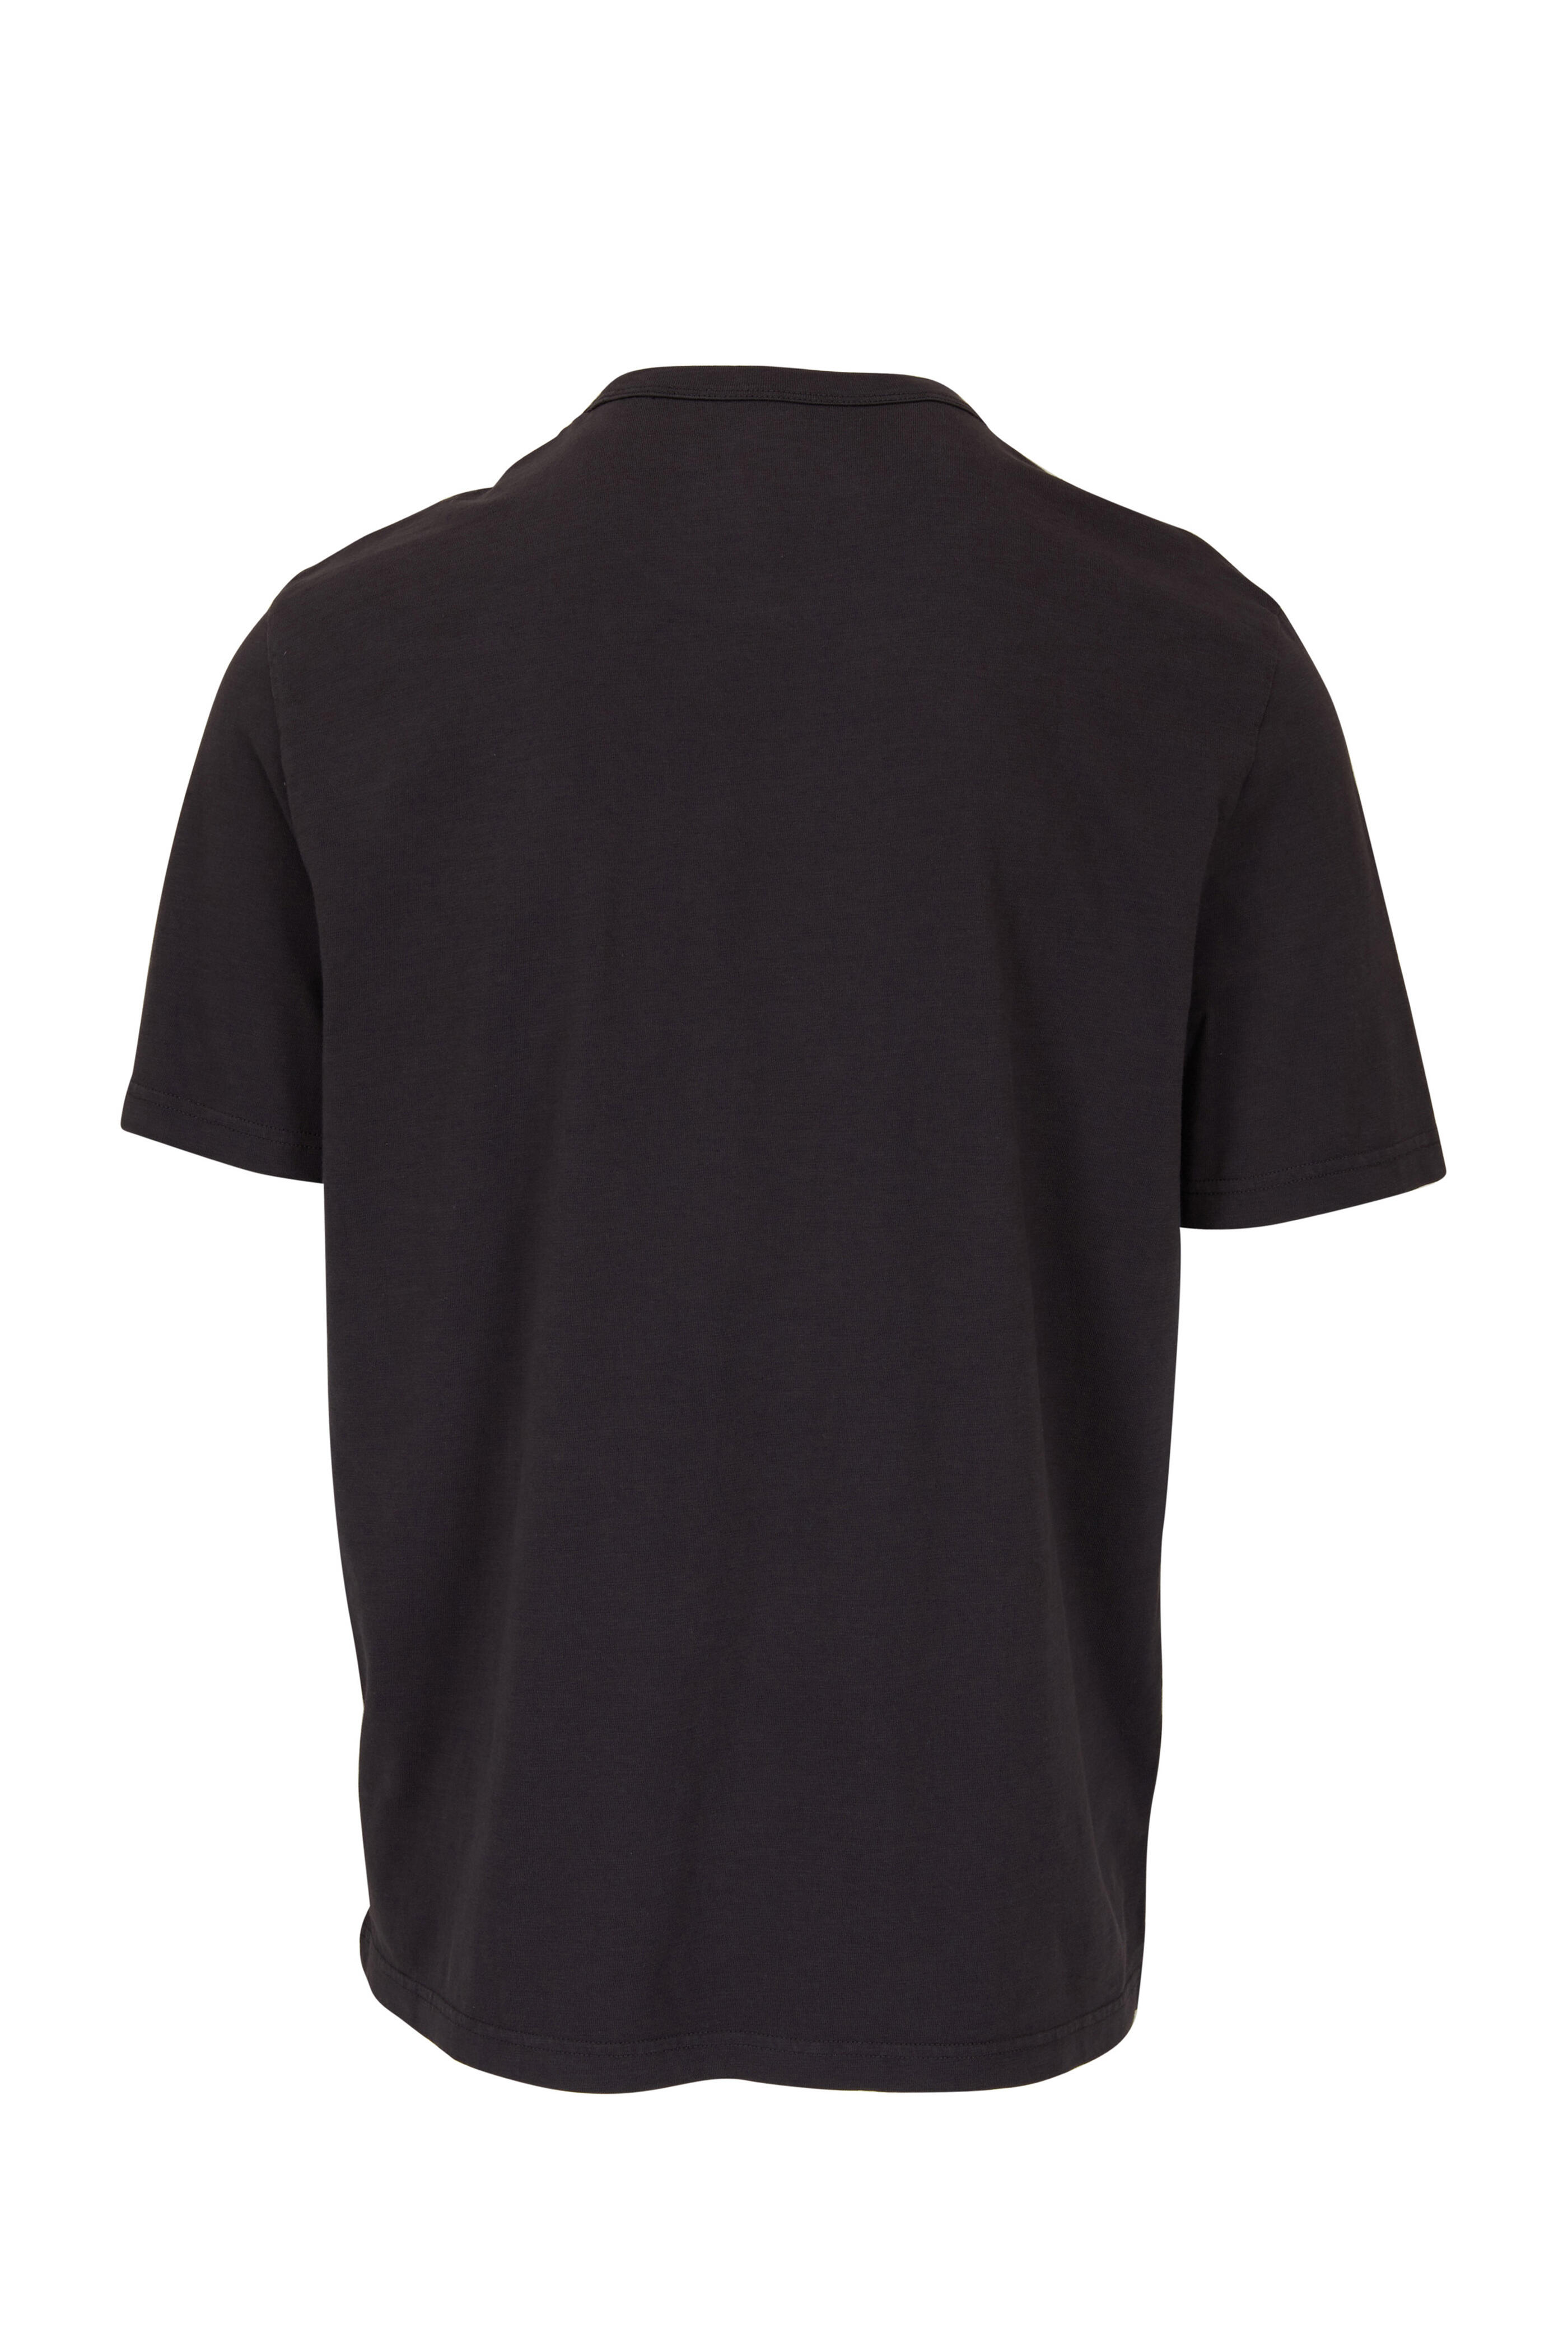 Faherty Brand - Washed Black Sunwashed Pocket T-Shirt